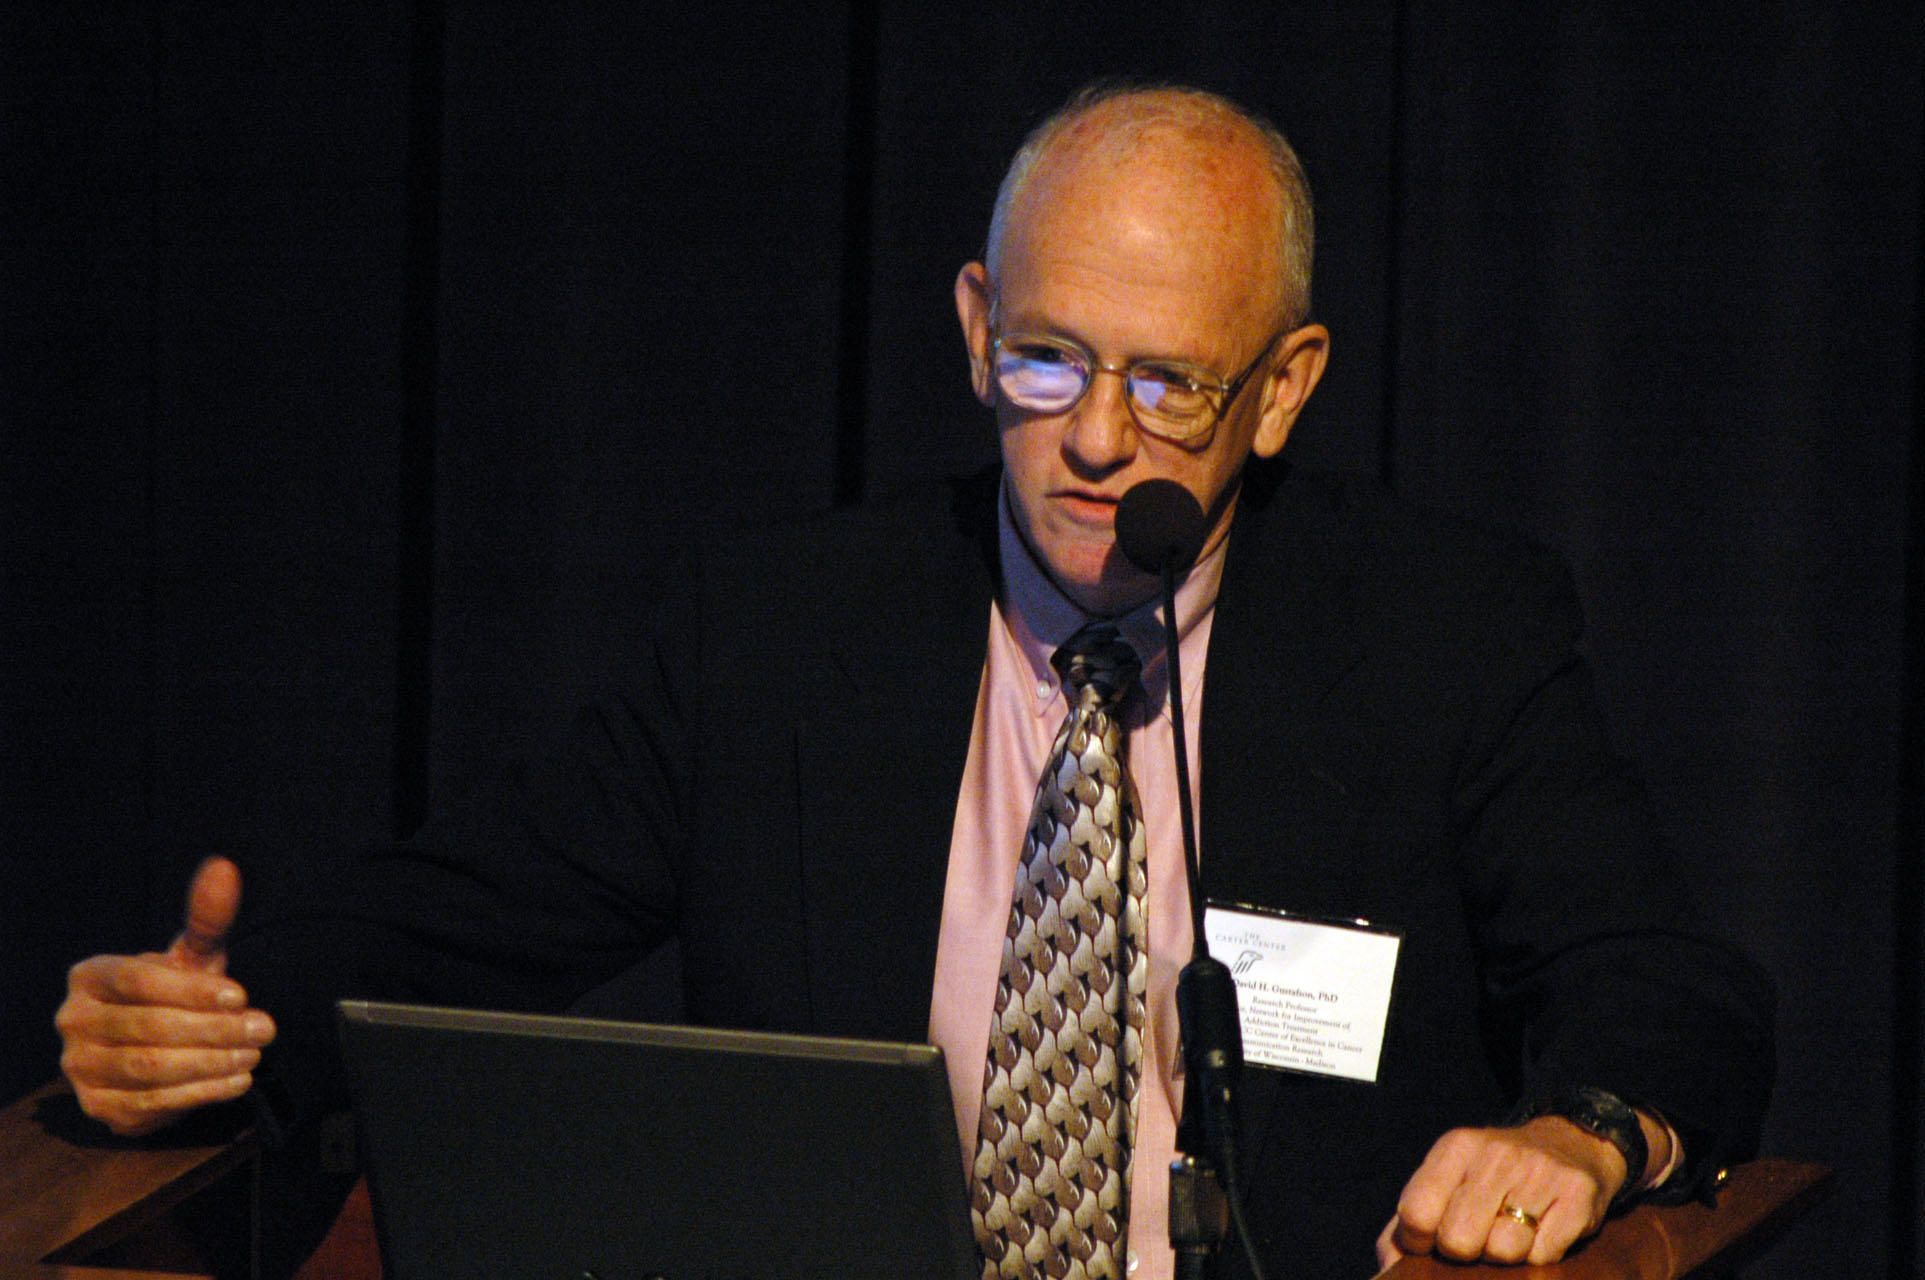 Dr. David Gustafson